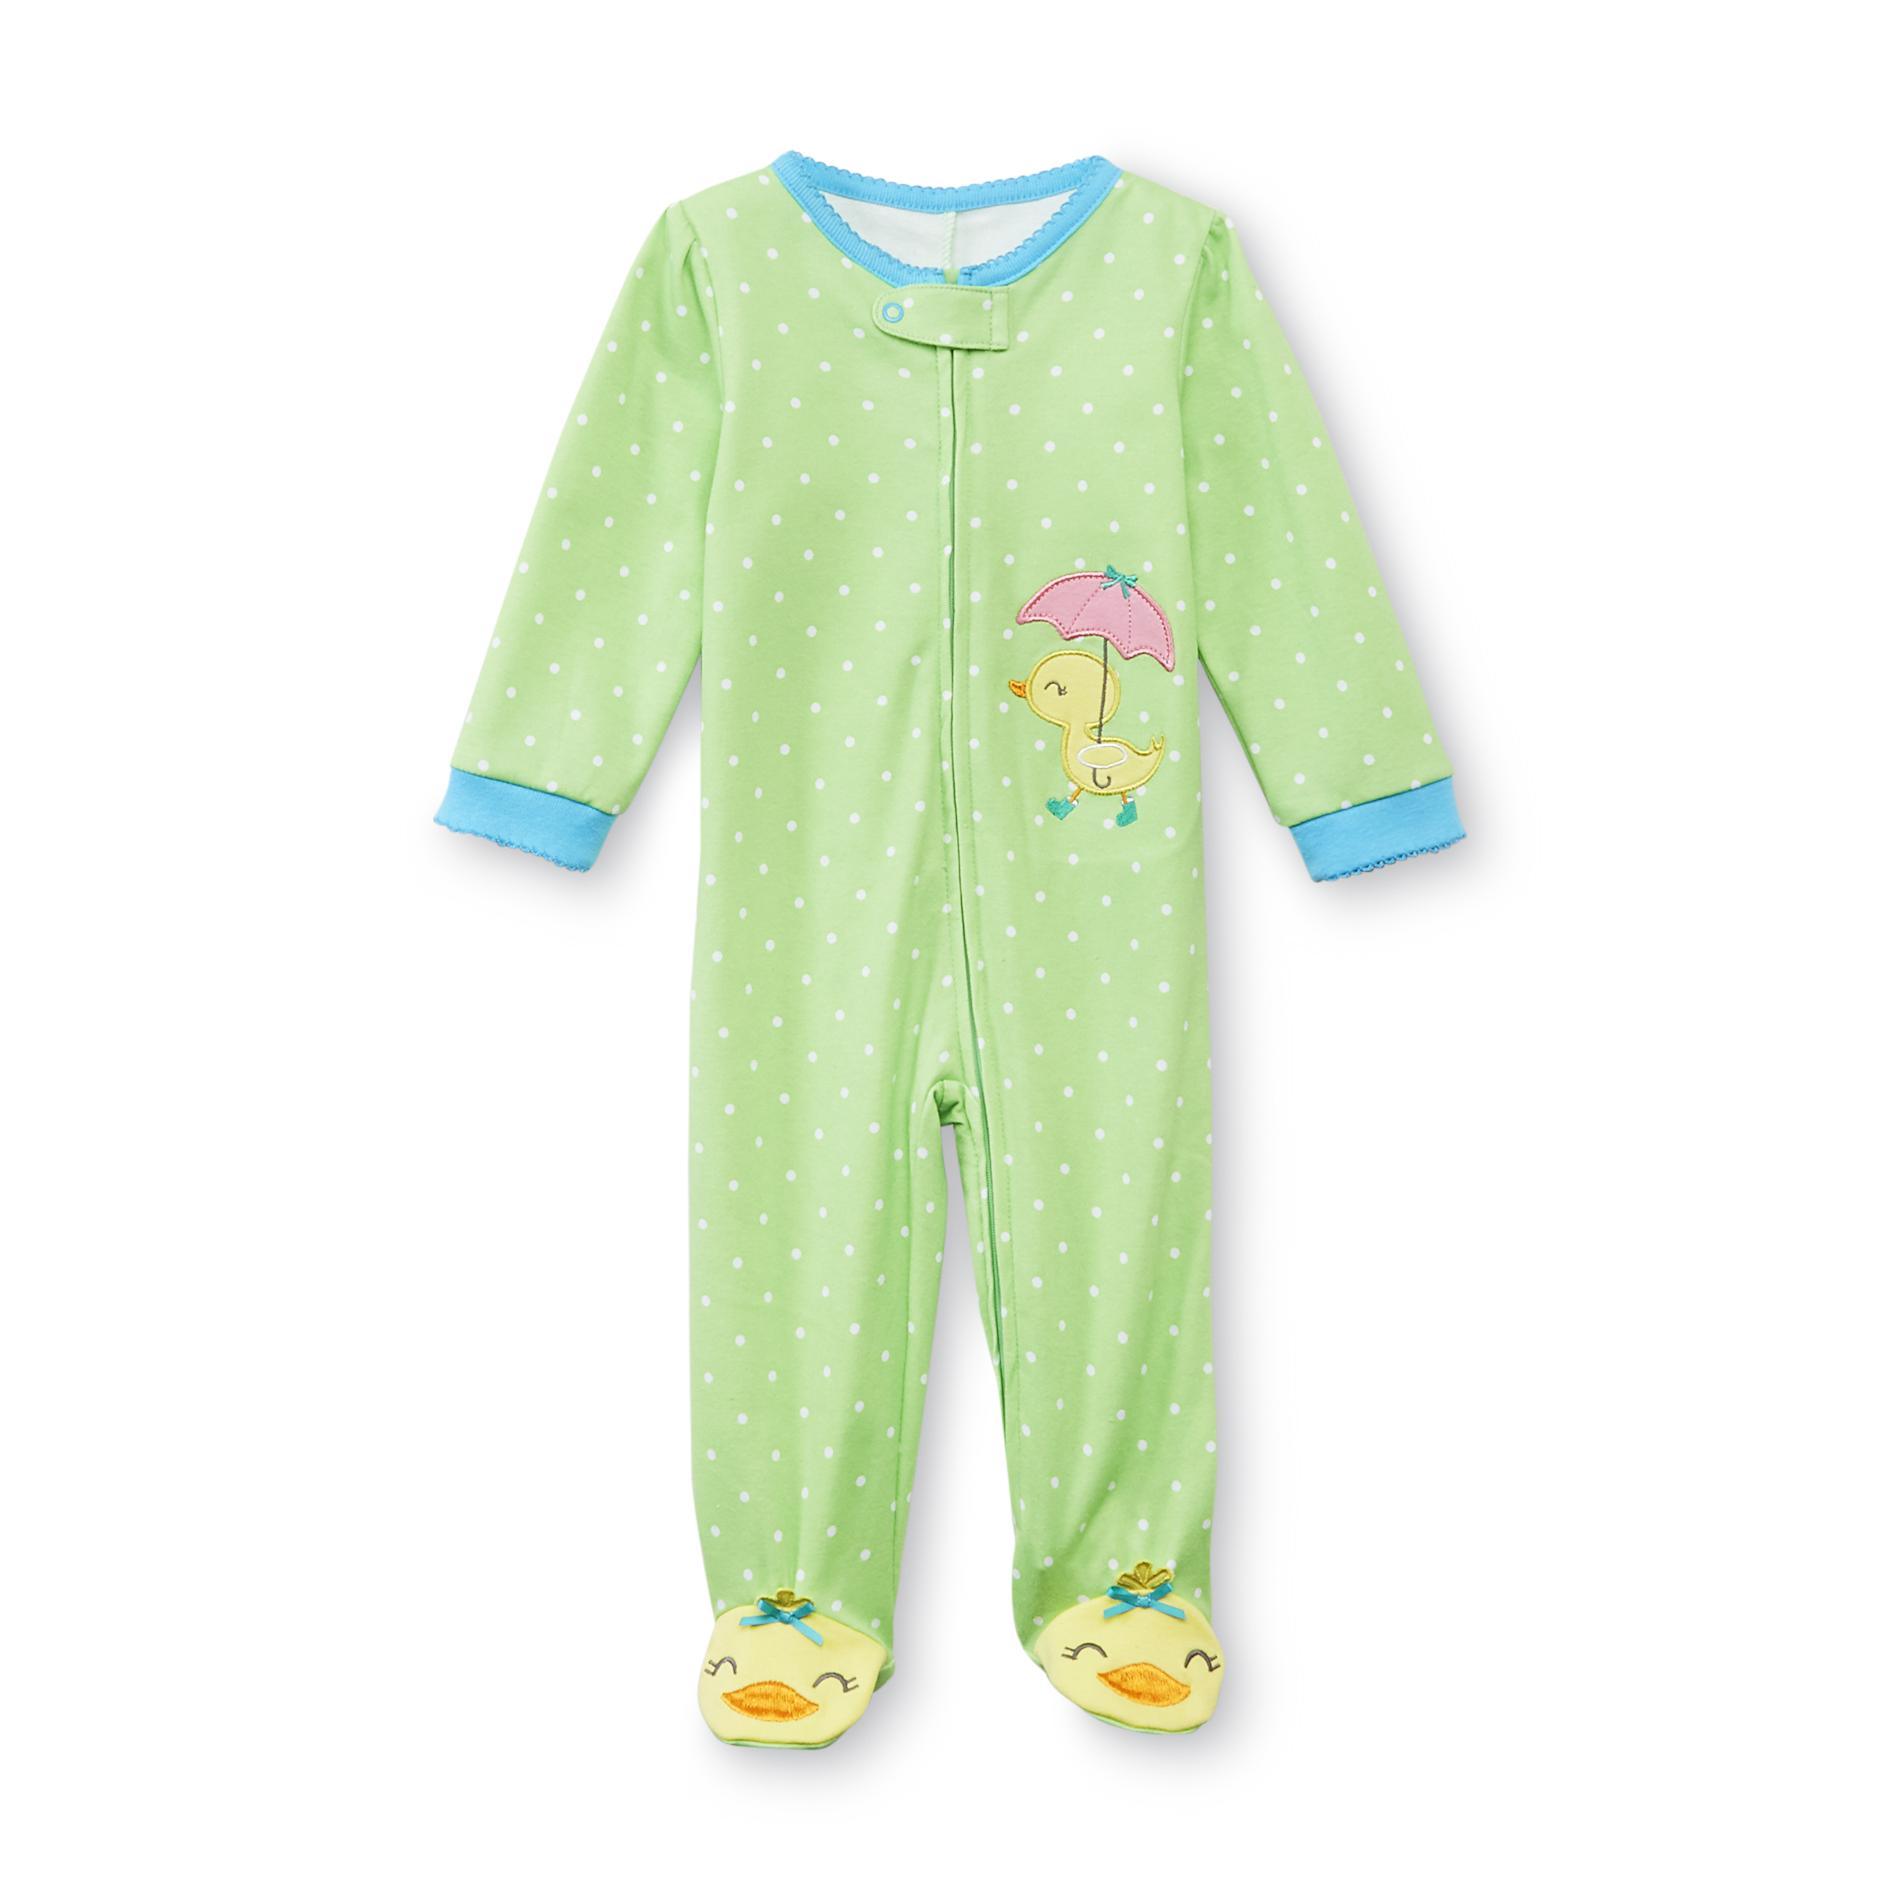 Little Wonders Newborn Girl's Footed Sleeper Pajamas - Baby Duck